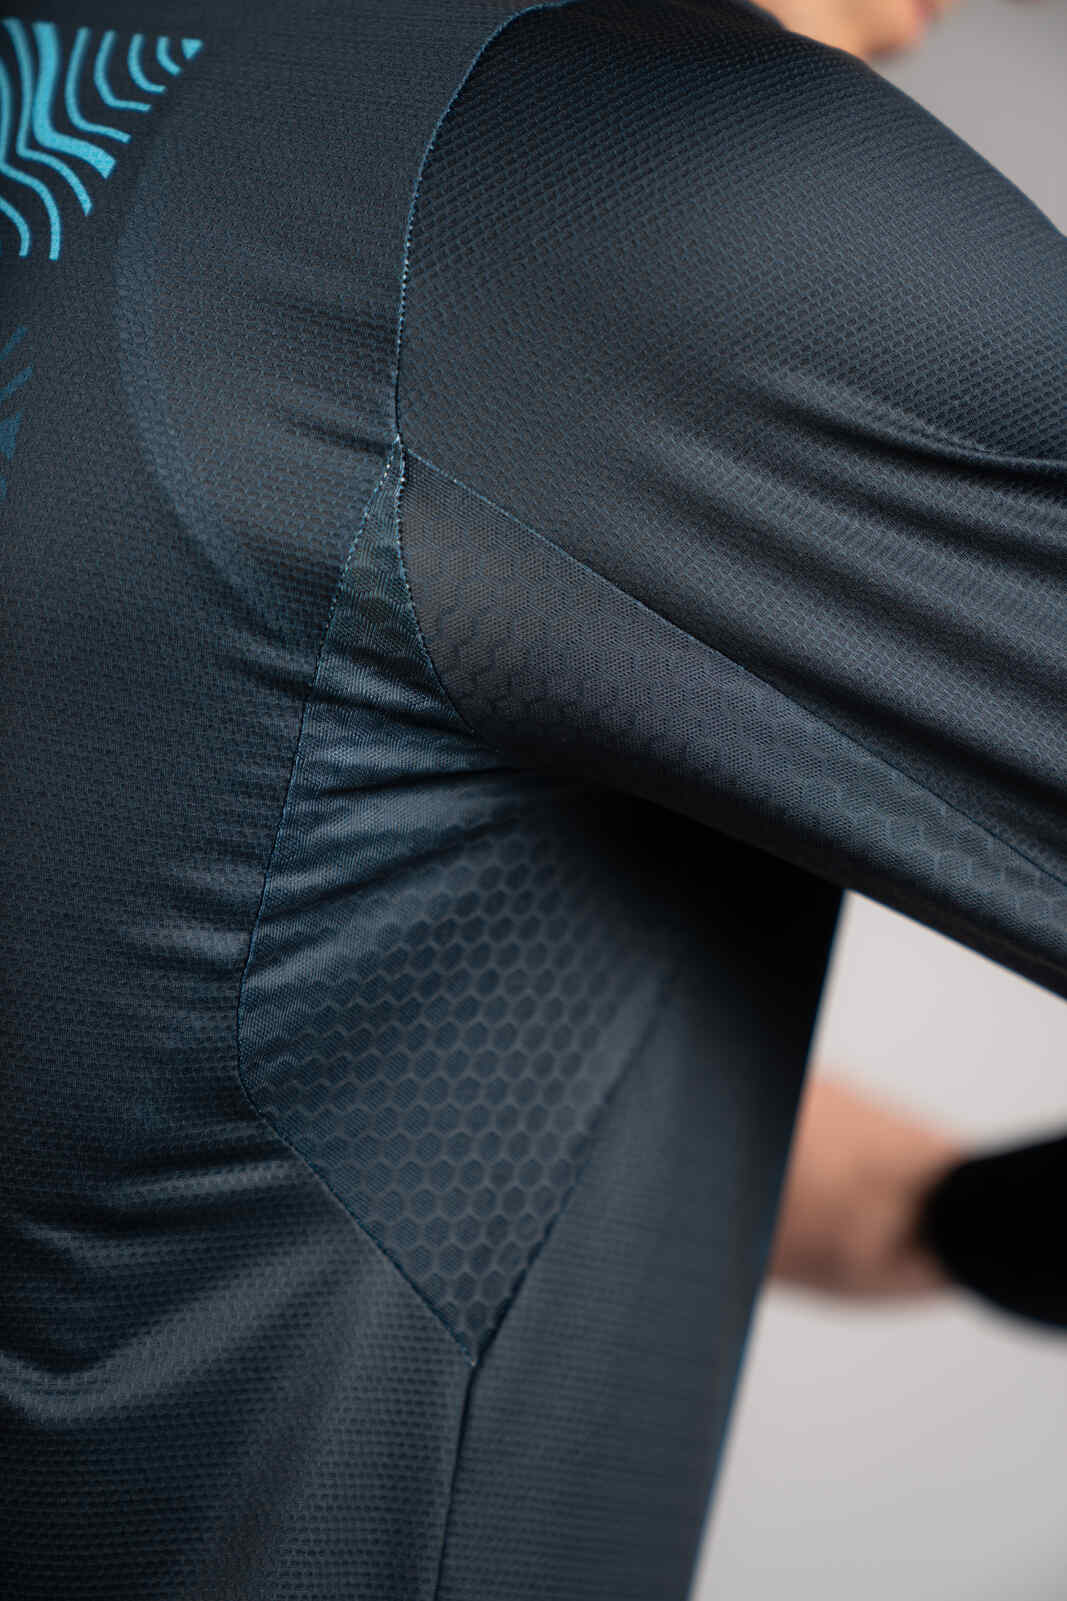 Men's Navy Blue Long Sleeve MTB Jersey - Mesh Underarm Fabric